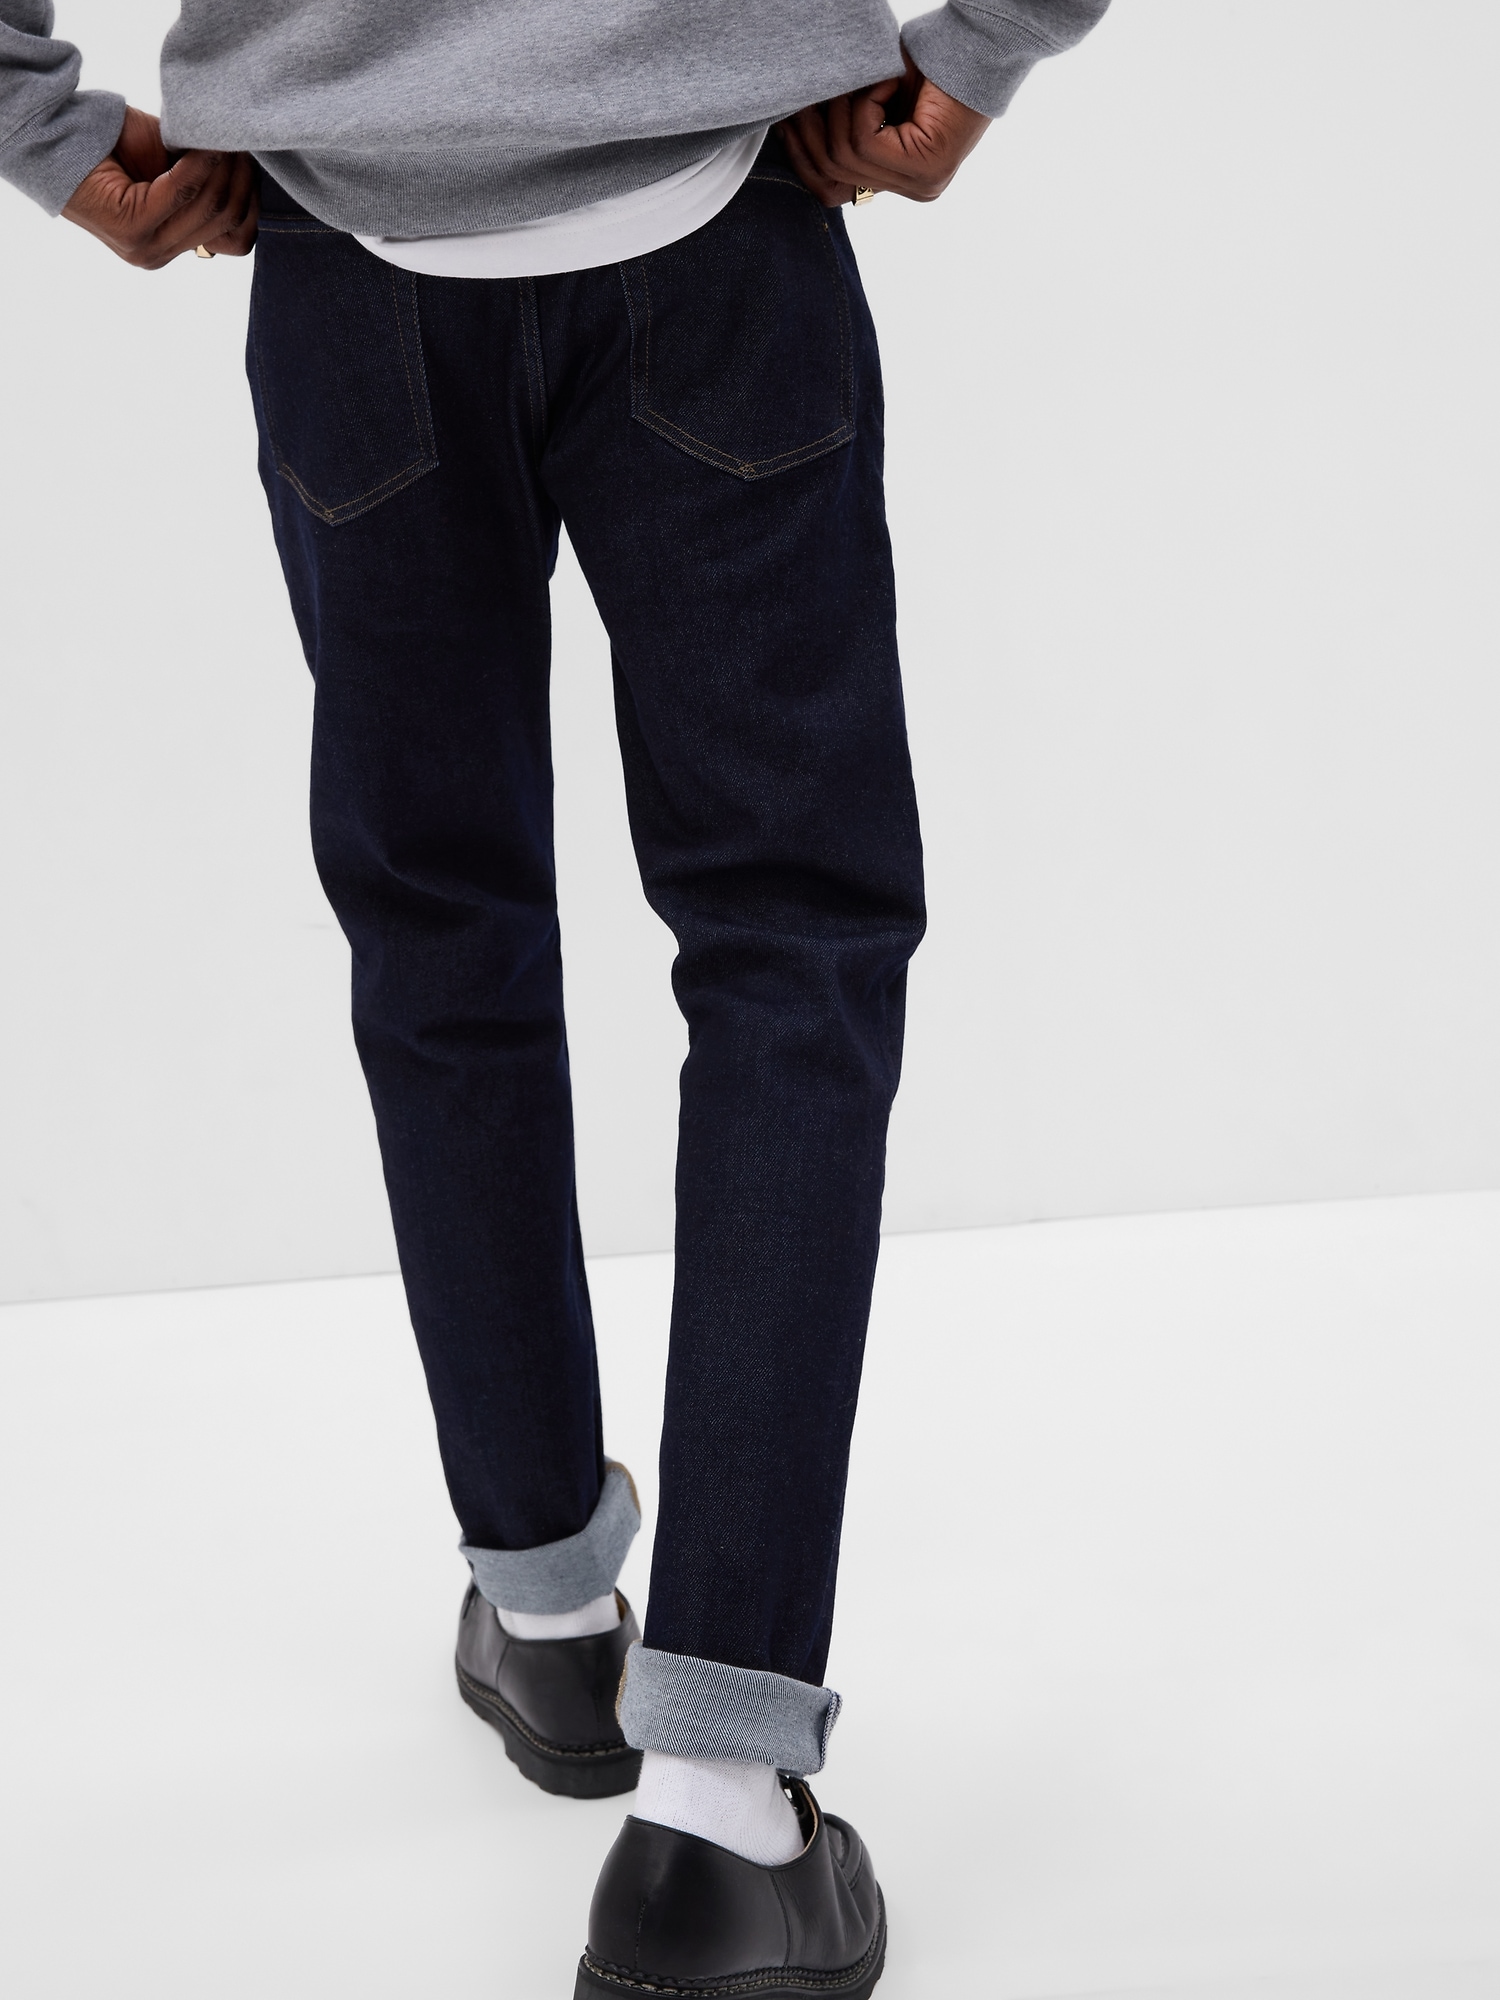 Gap Gapflex Slim Jeans Rinse Dark Blue Men's Size 31 x 30 Slim